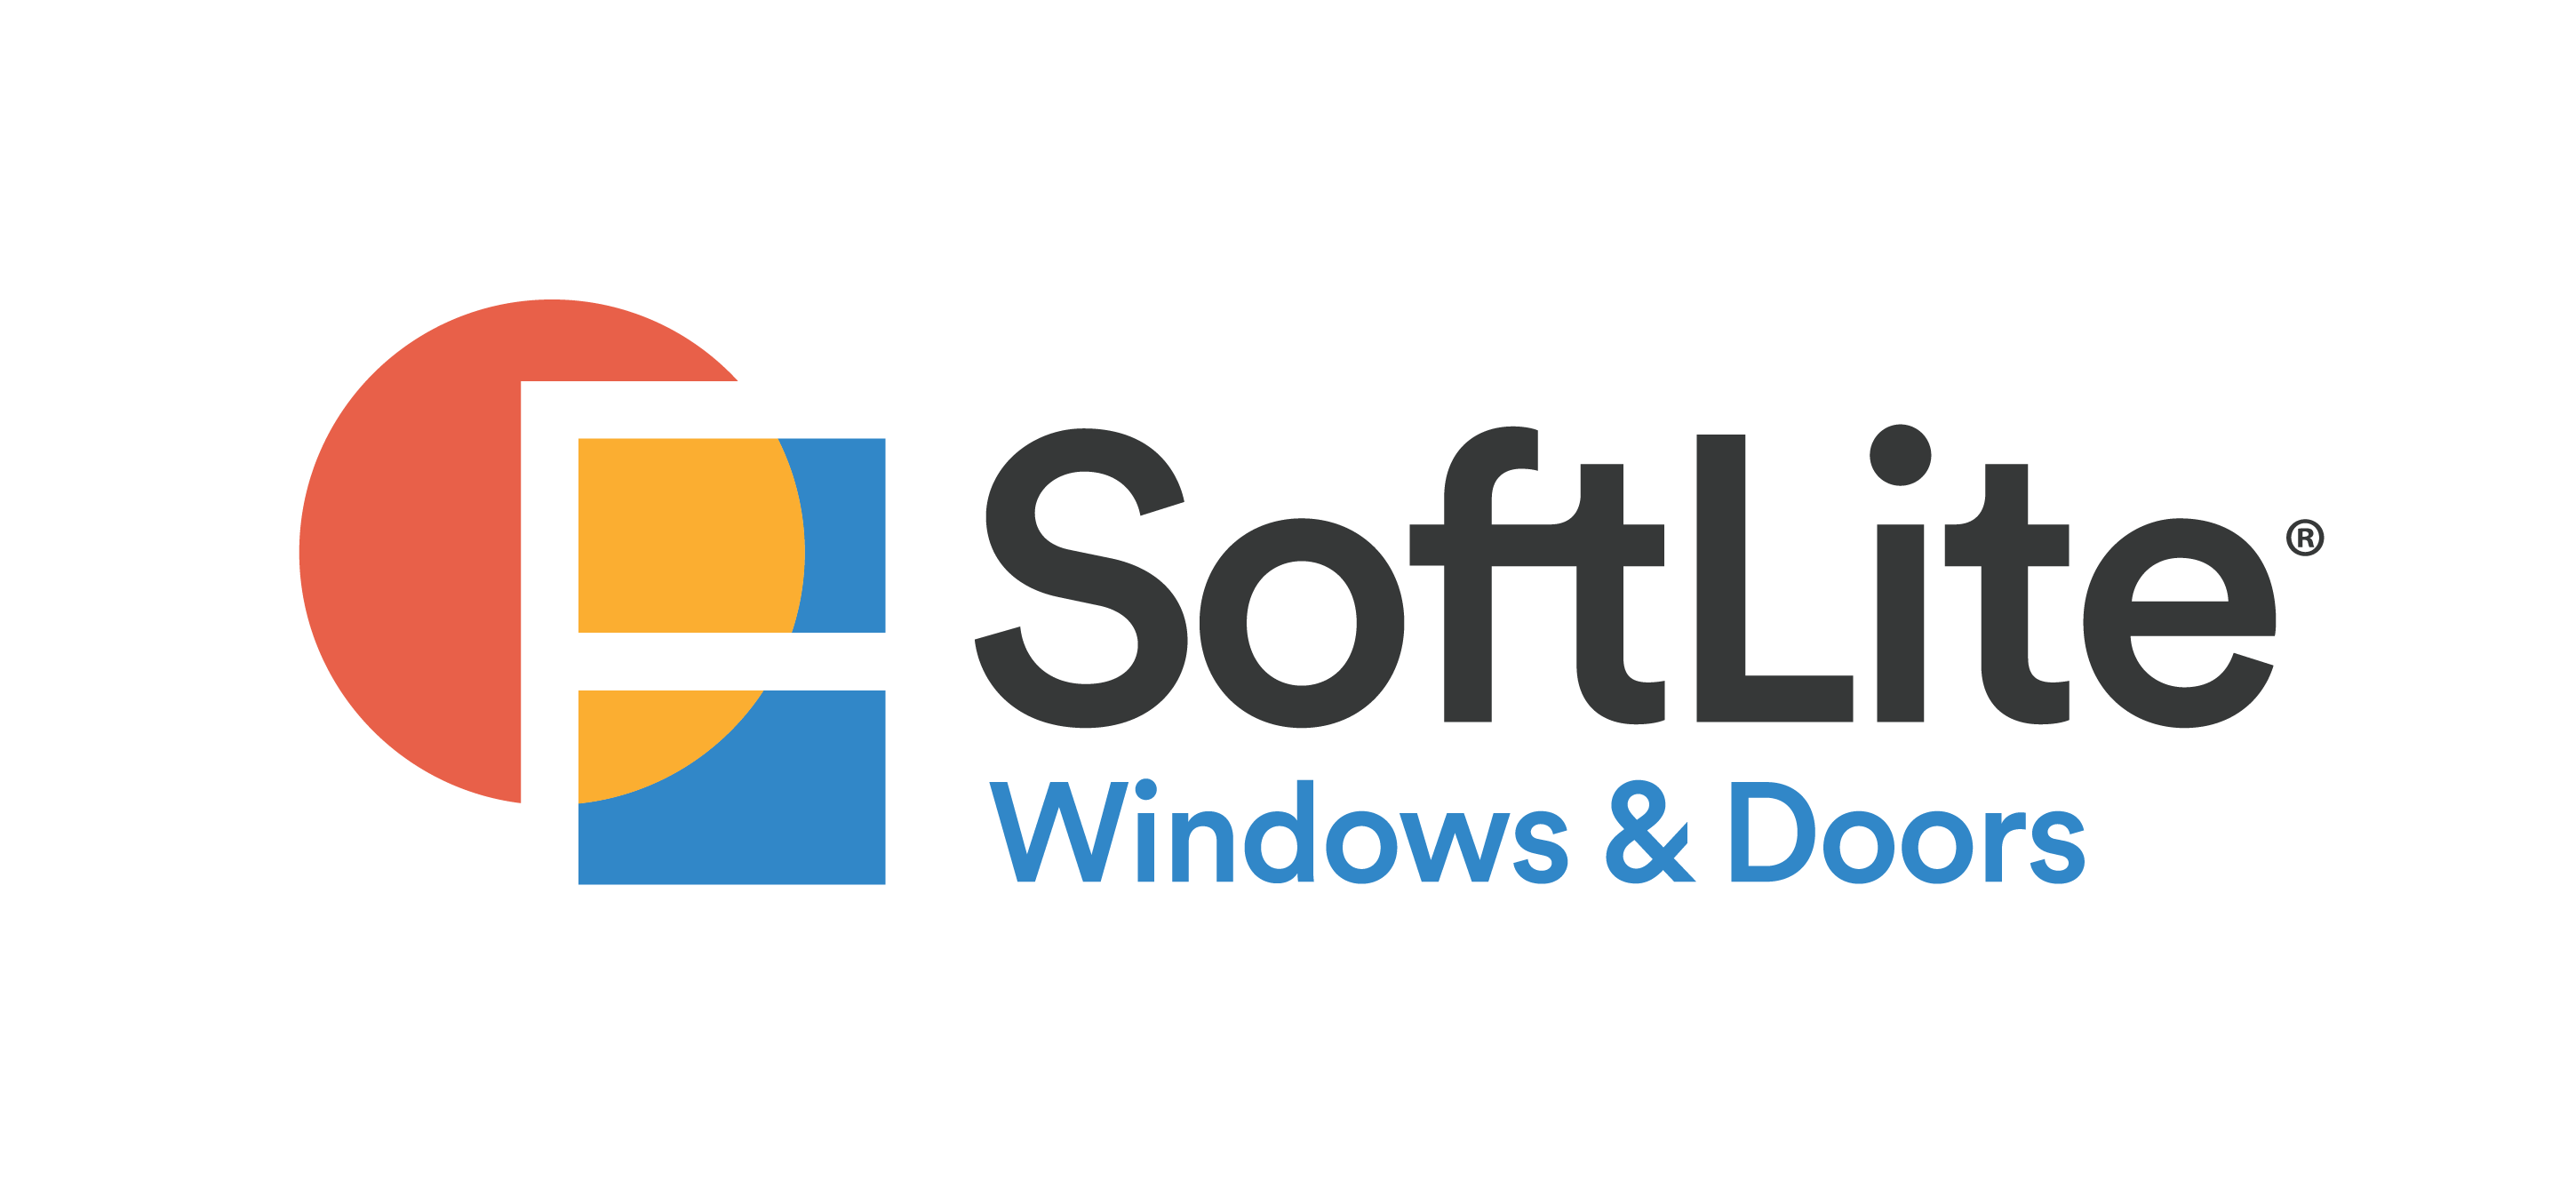 SoftLite Windows